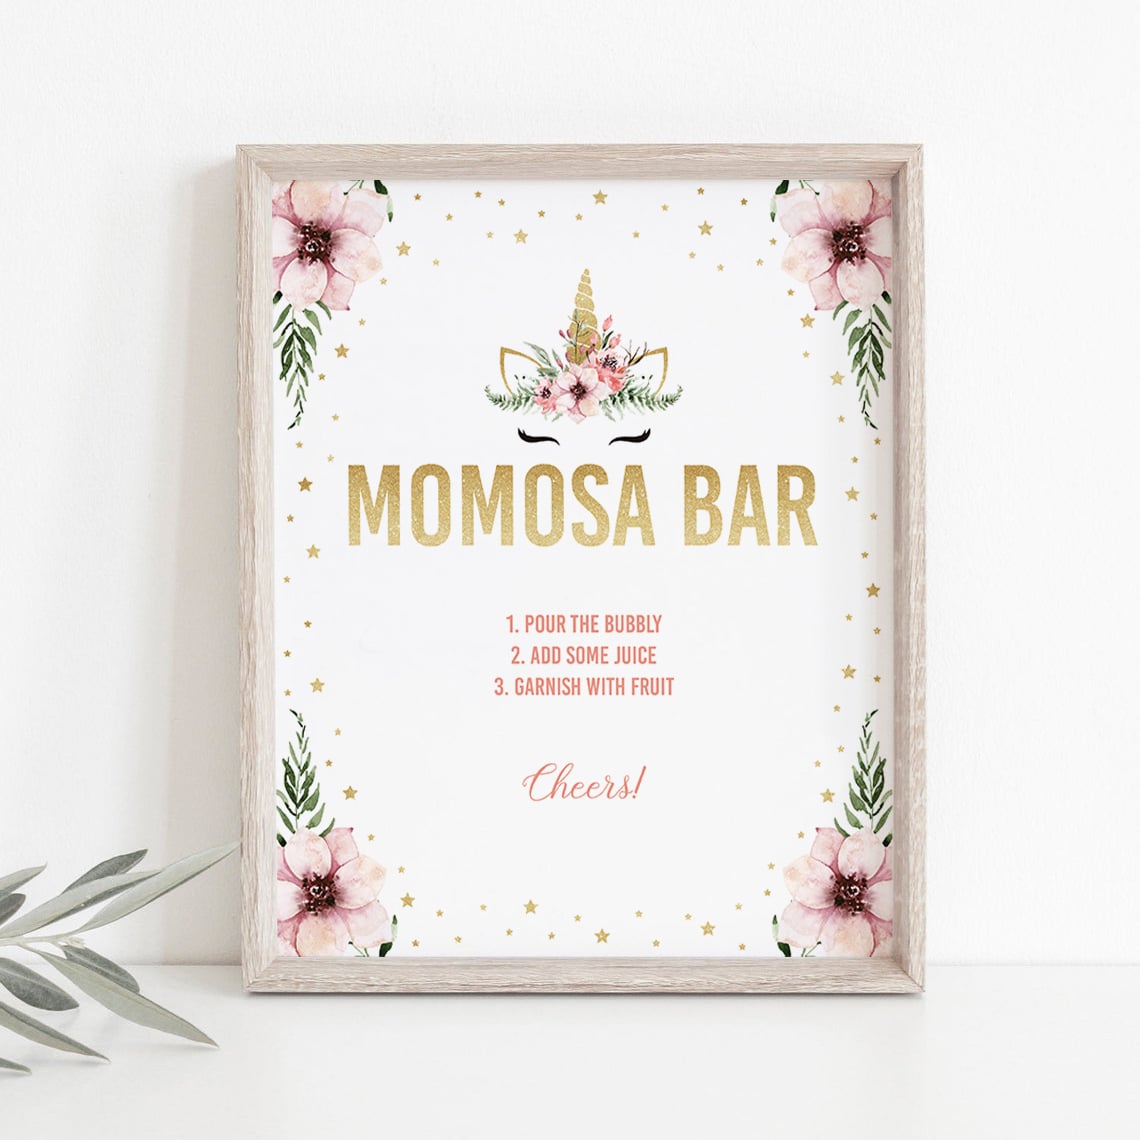 Unicorn baby shower decorations momosa bar table sign by LittleSizzle